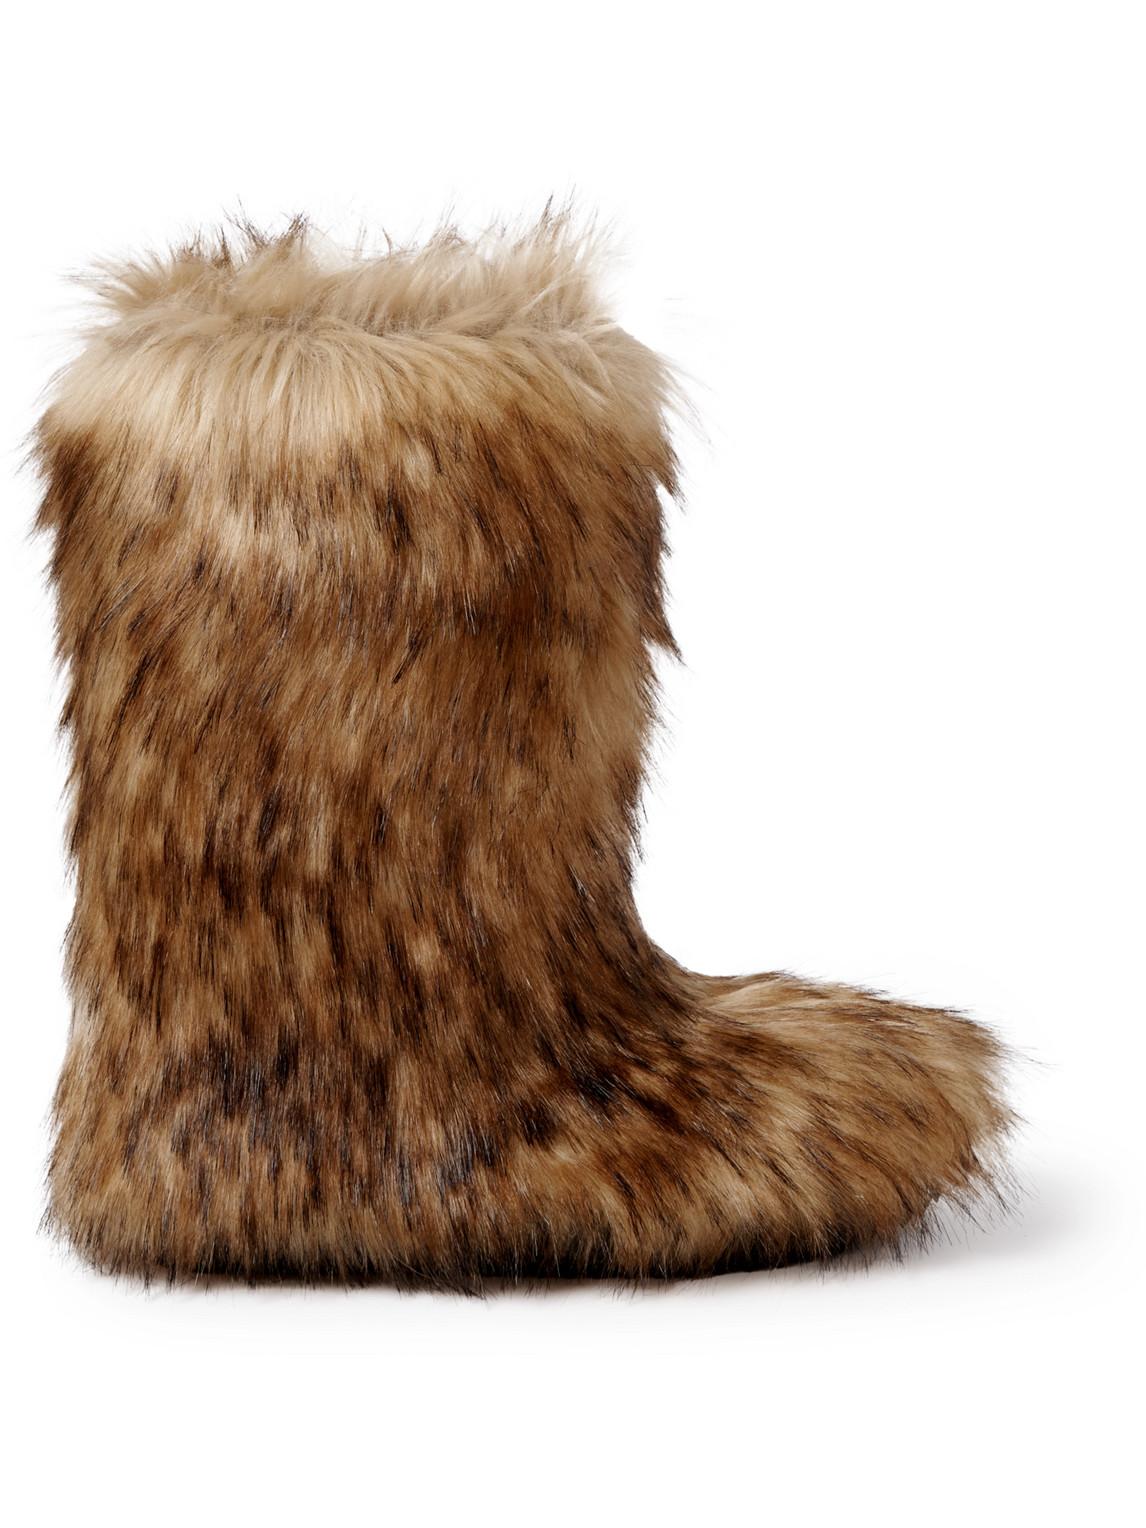 CELINE HOMME Faux Fur Boots in Brown for Men | Lyst